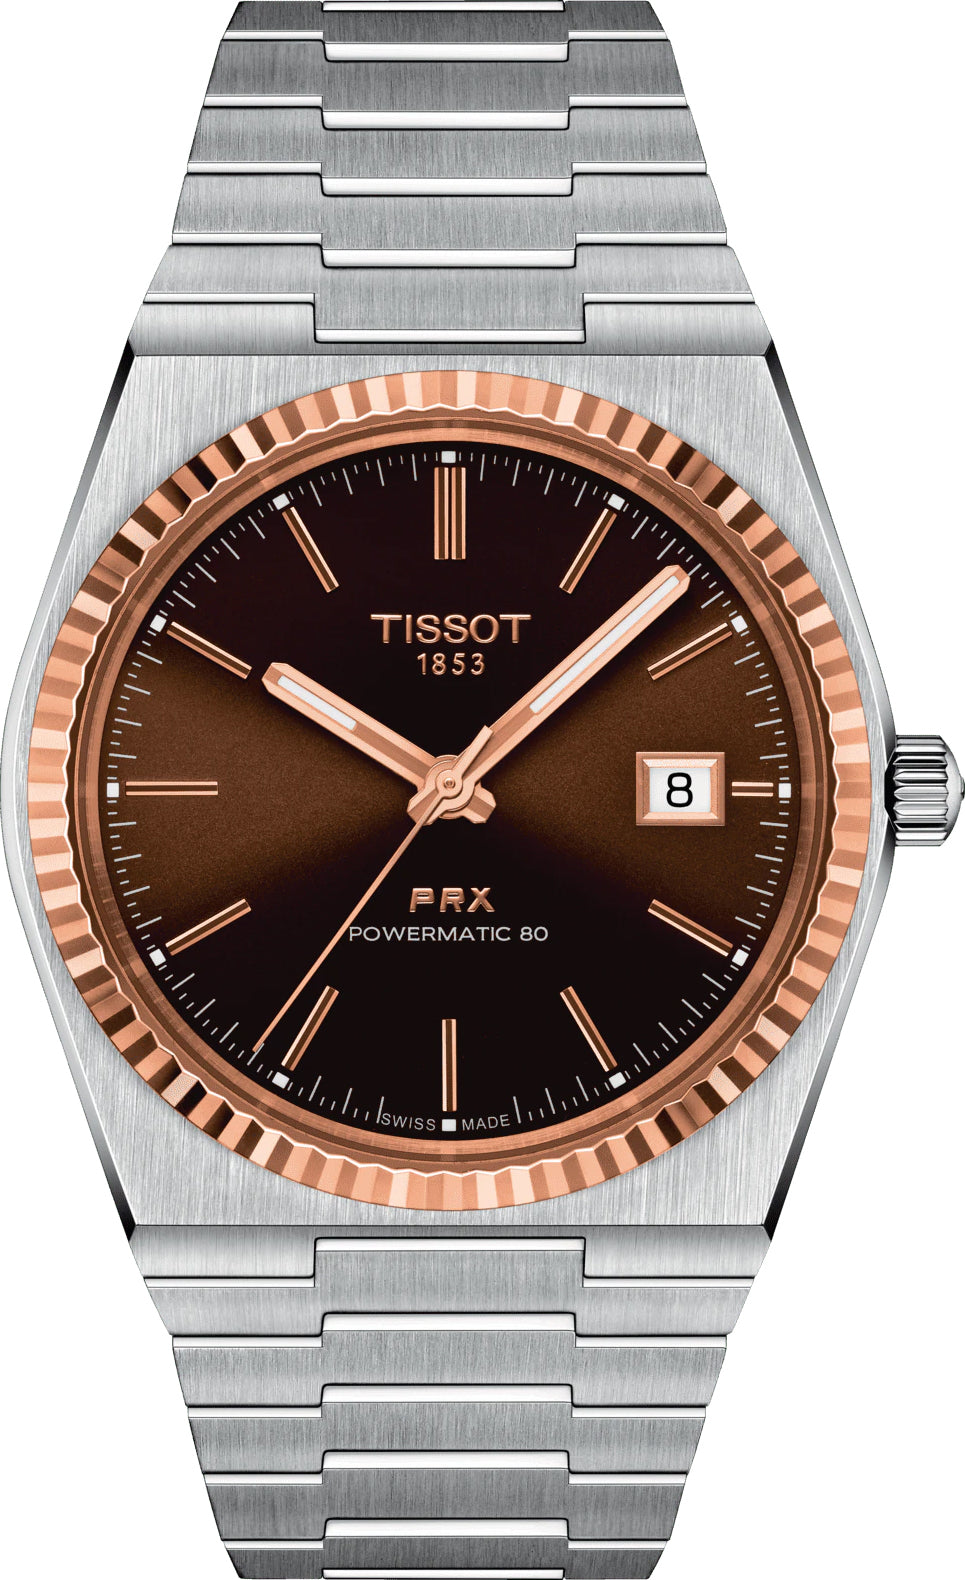 Tissot Watch Prx Powermatic 80 Steeland18k Gold